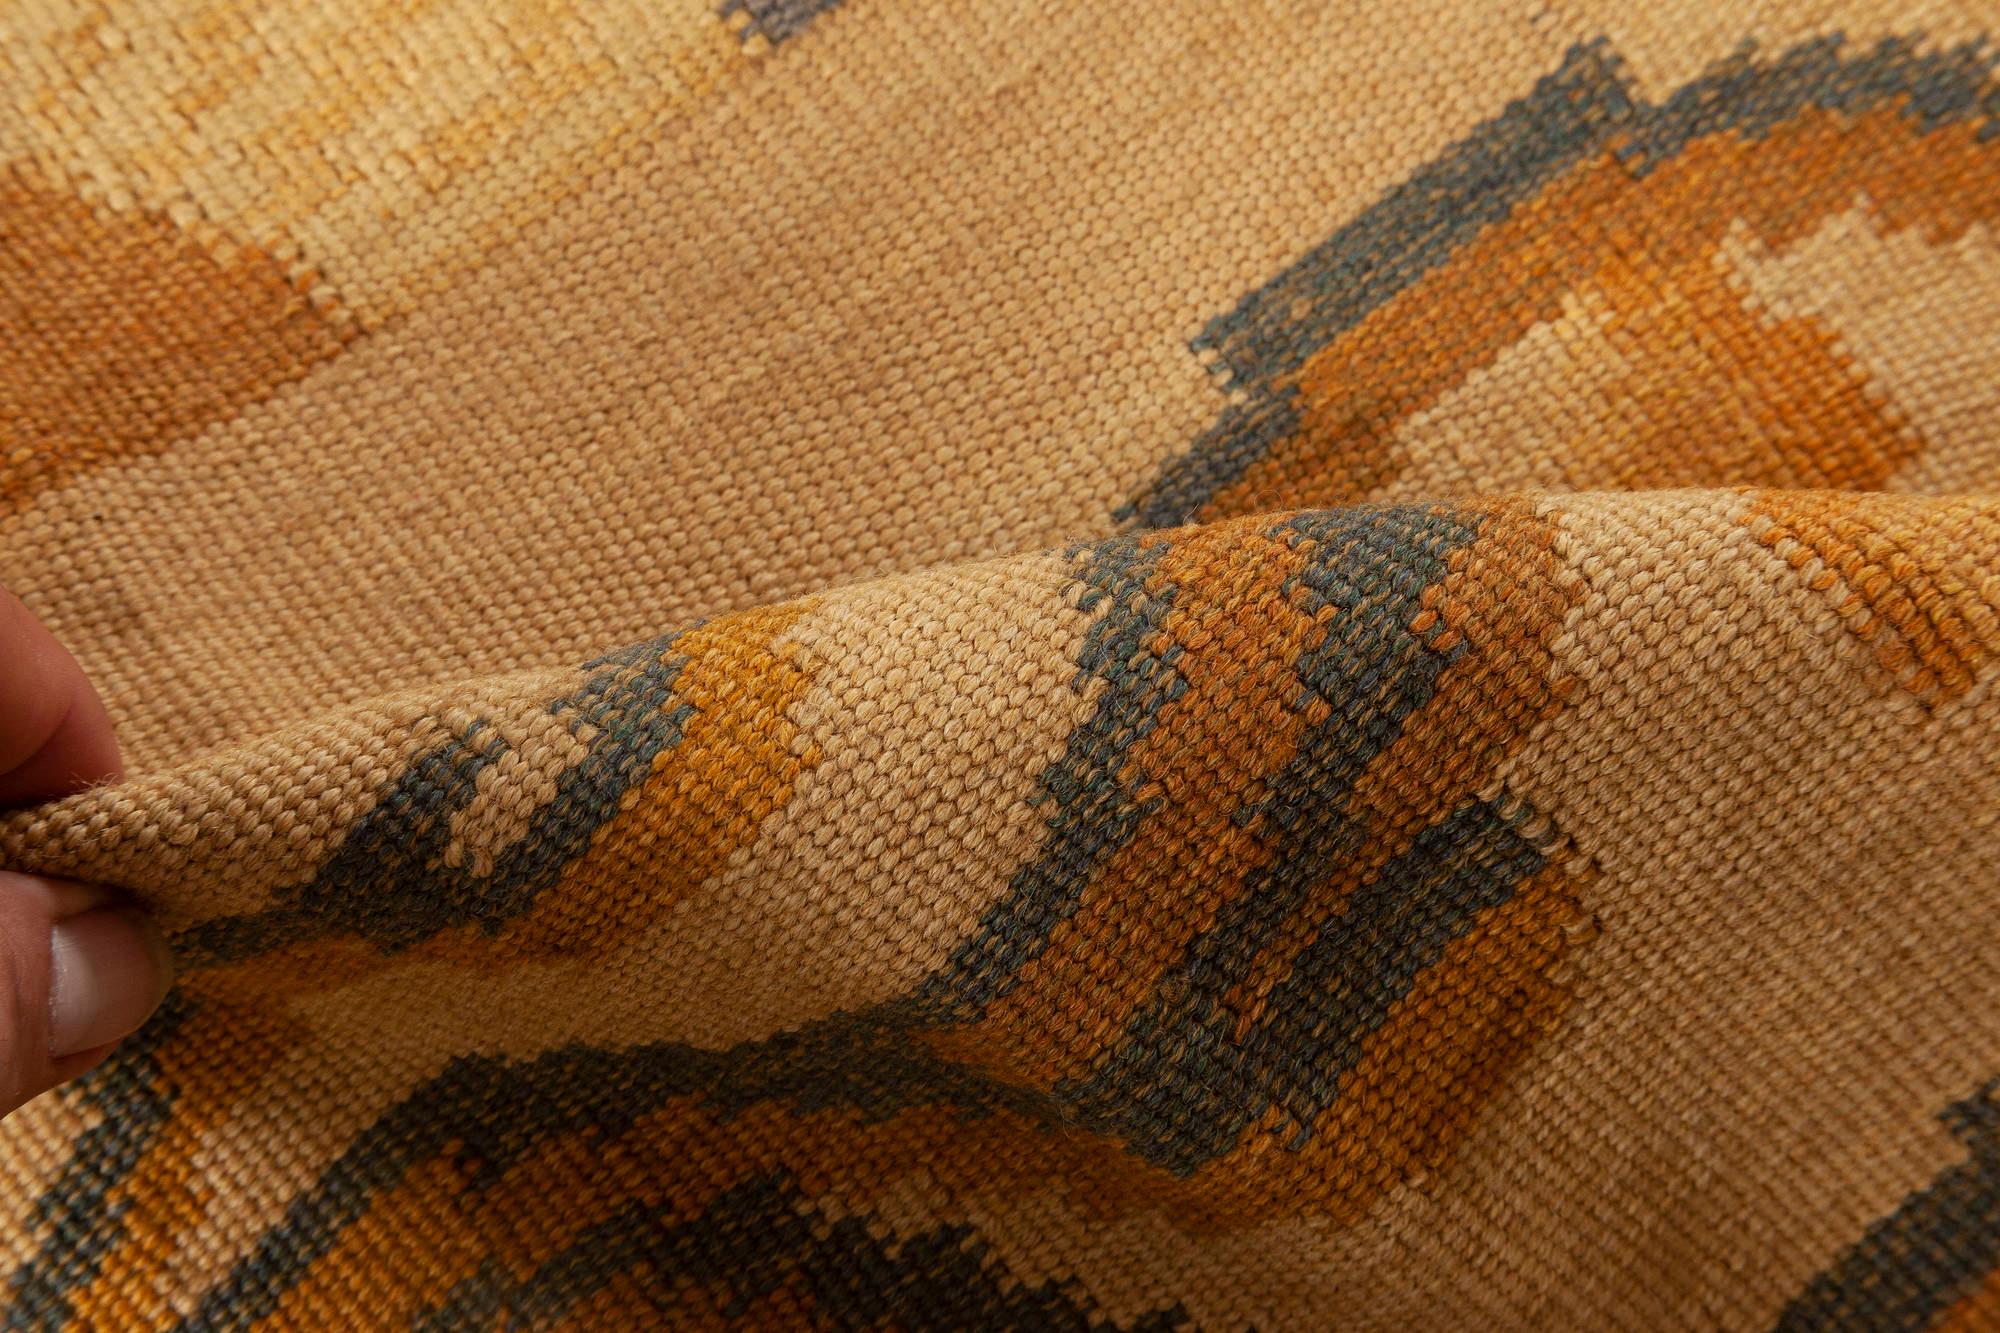 Contemporary floral Bessarabian design handmade wool rug by Doris Leslie Blau.
Size: 13.7